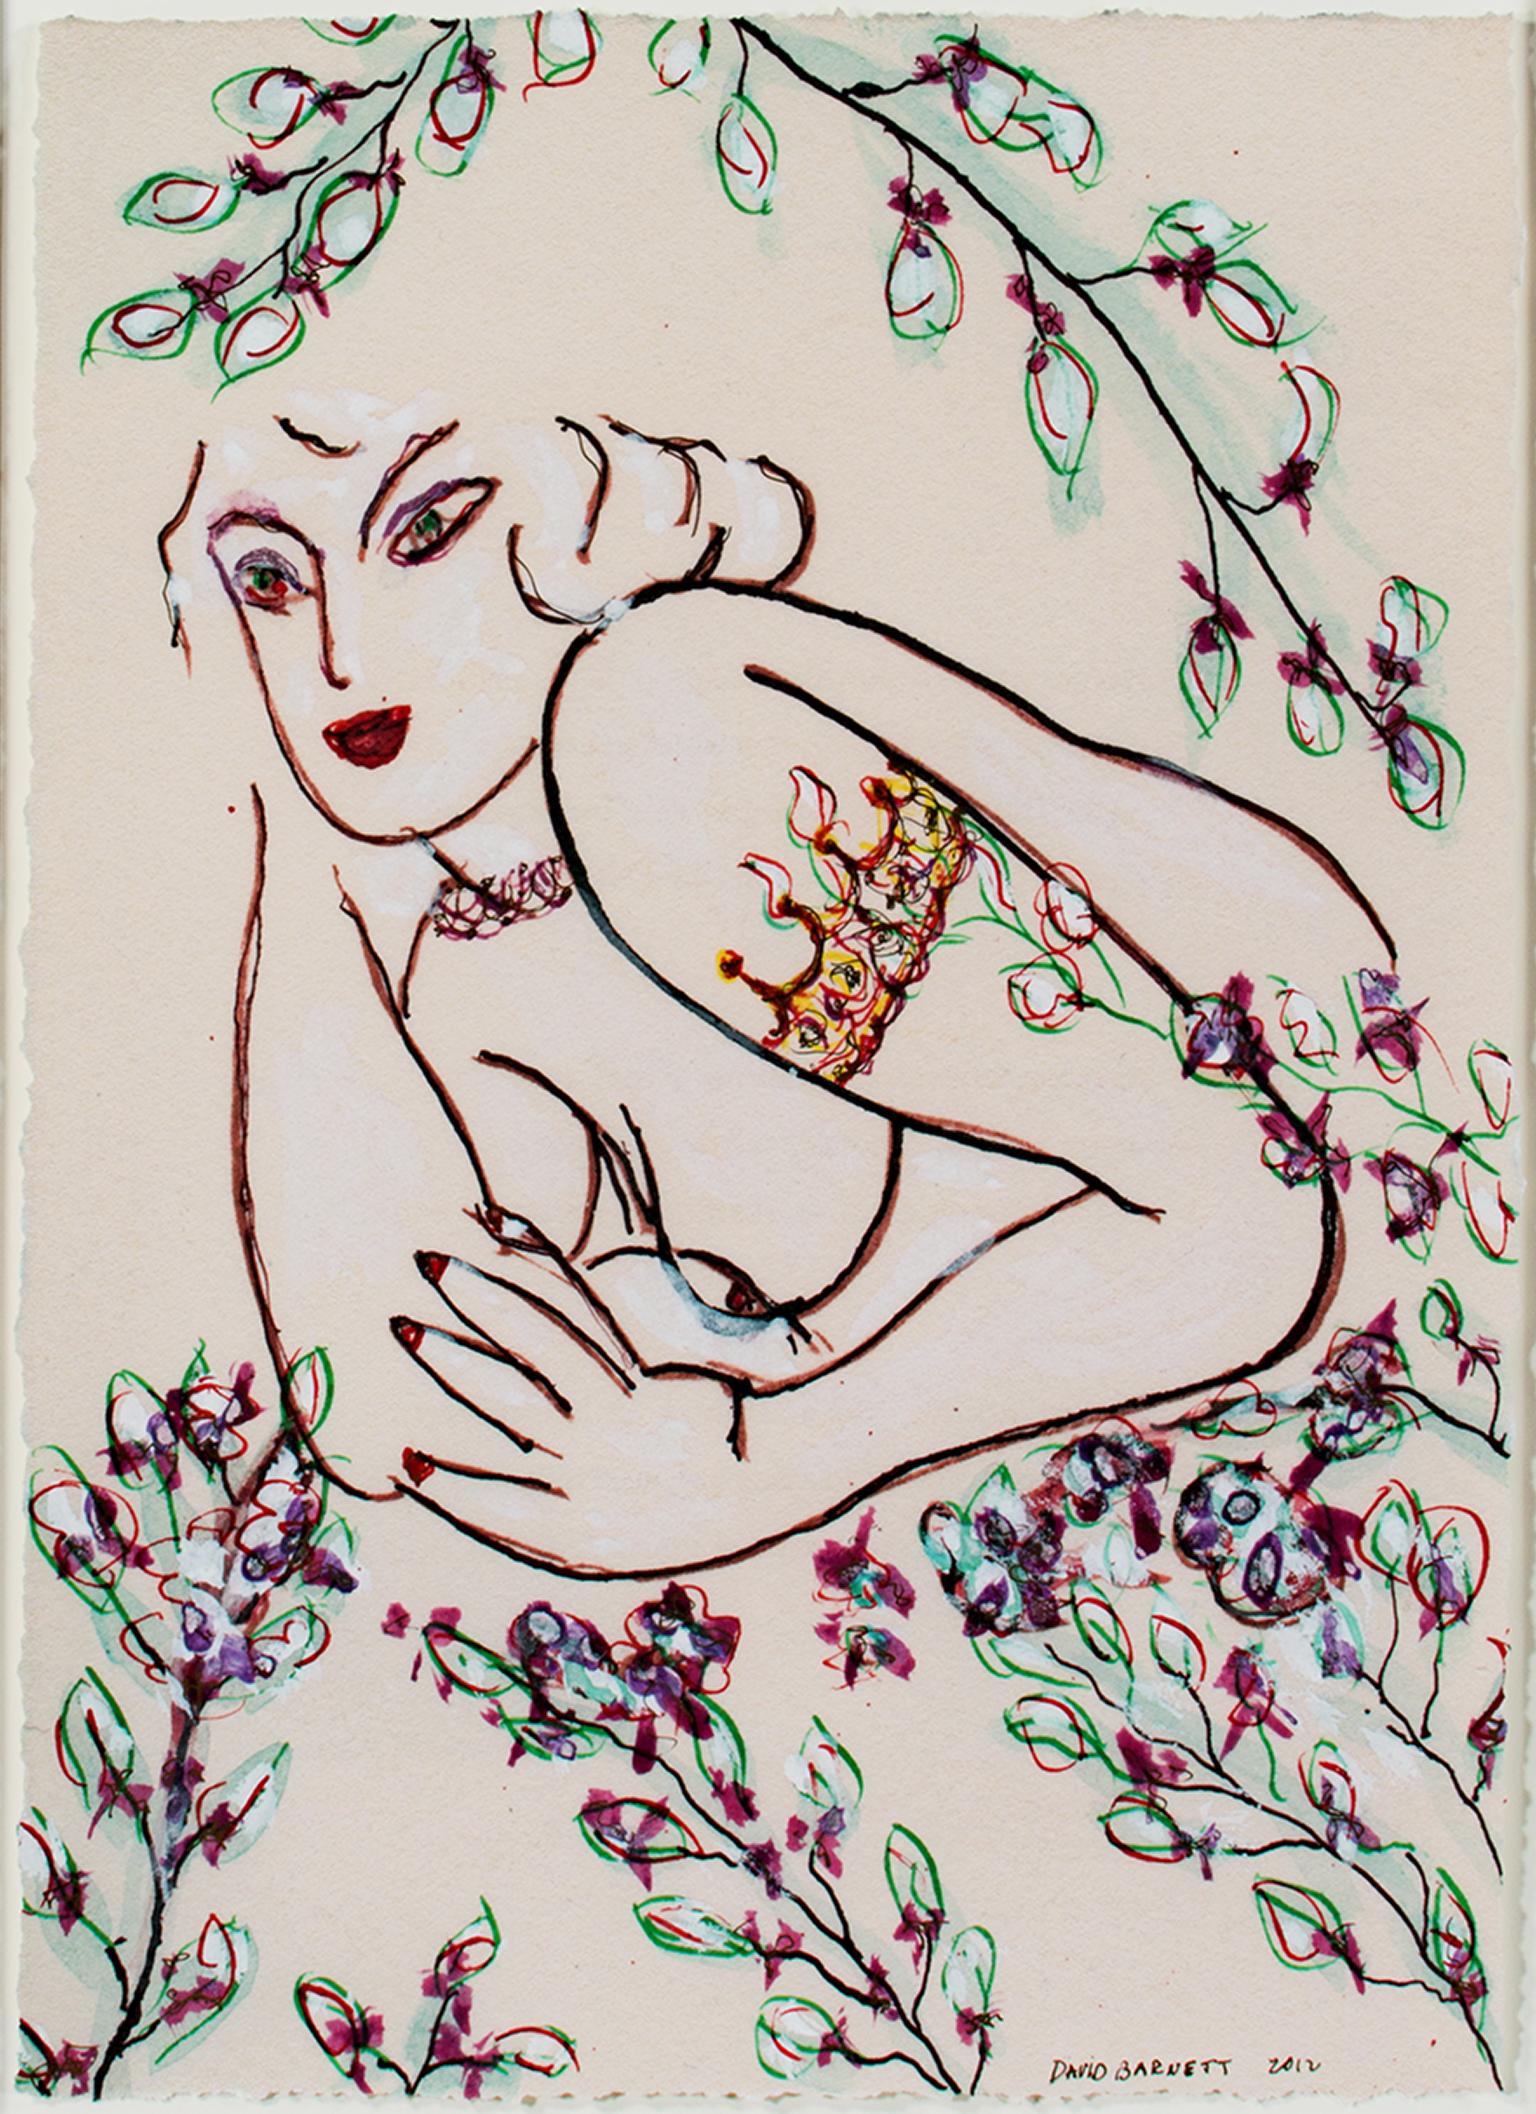 "Famous Artist Series: Tattooed Matisse Model Variation III" by David Barnett